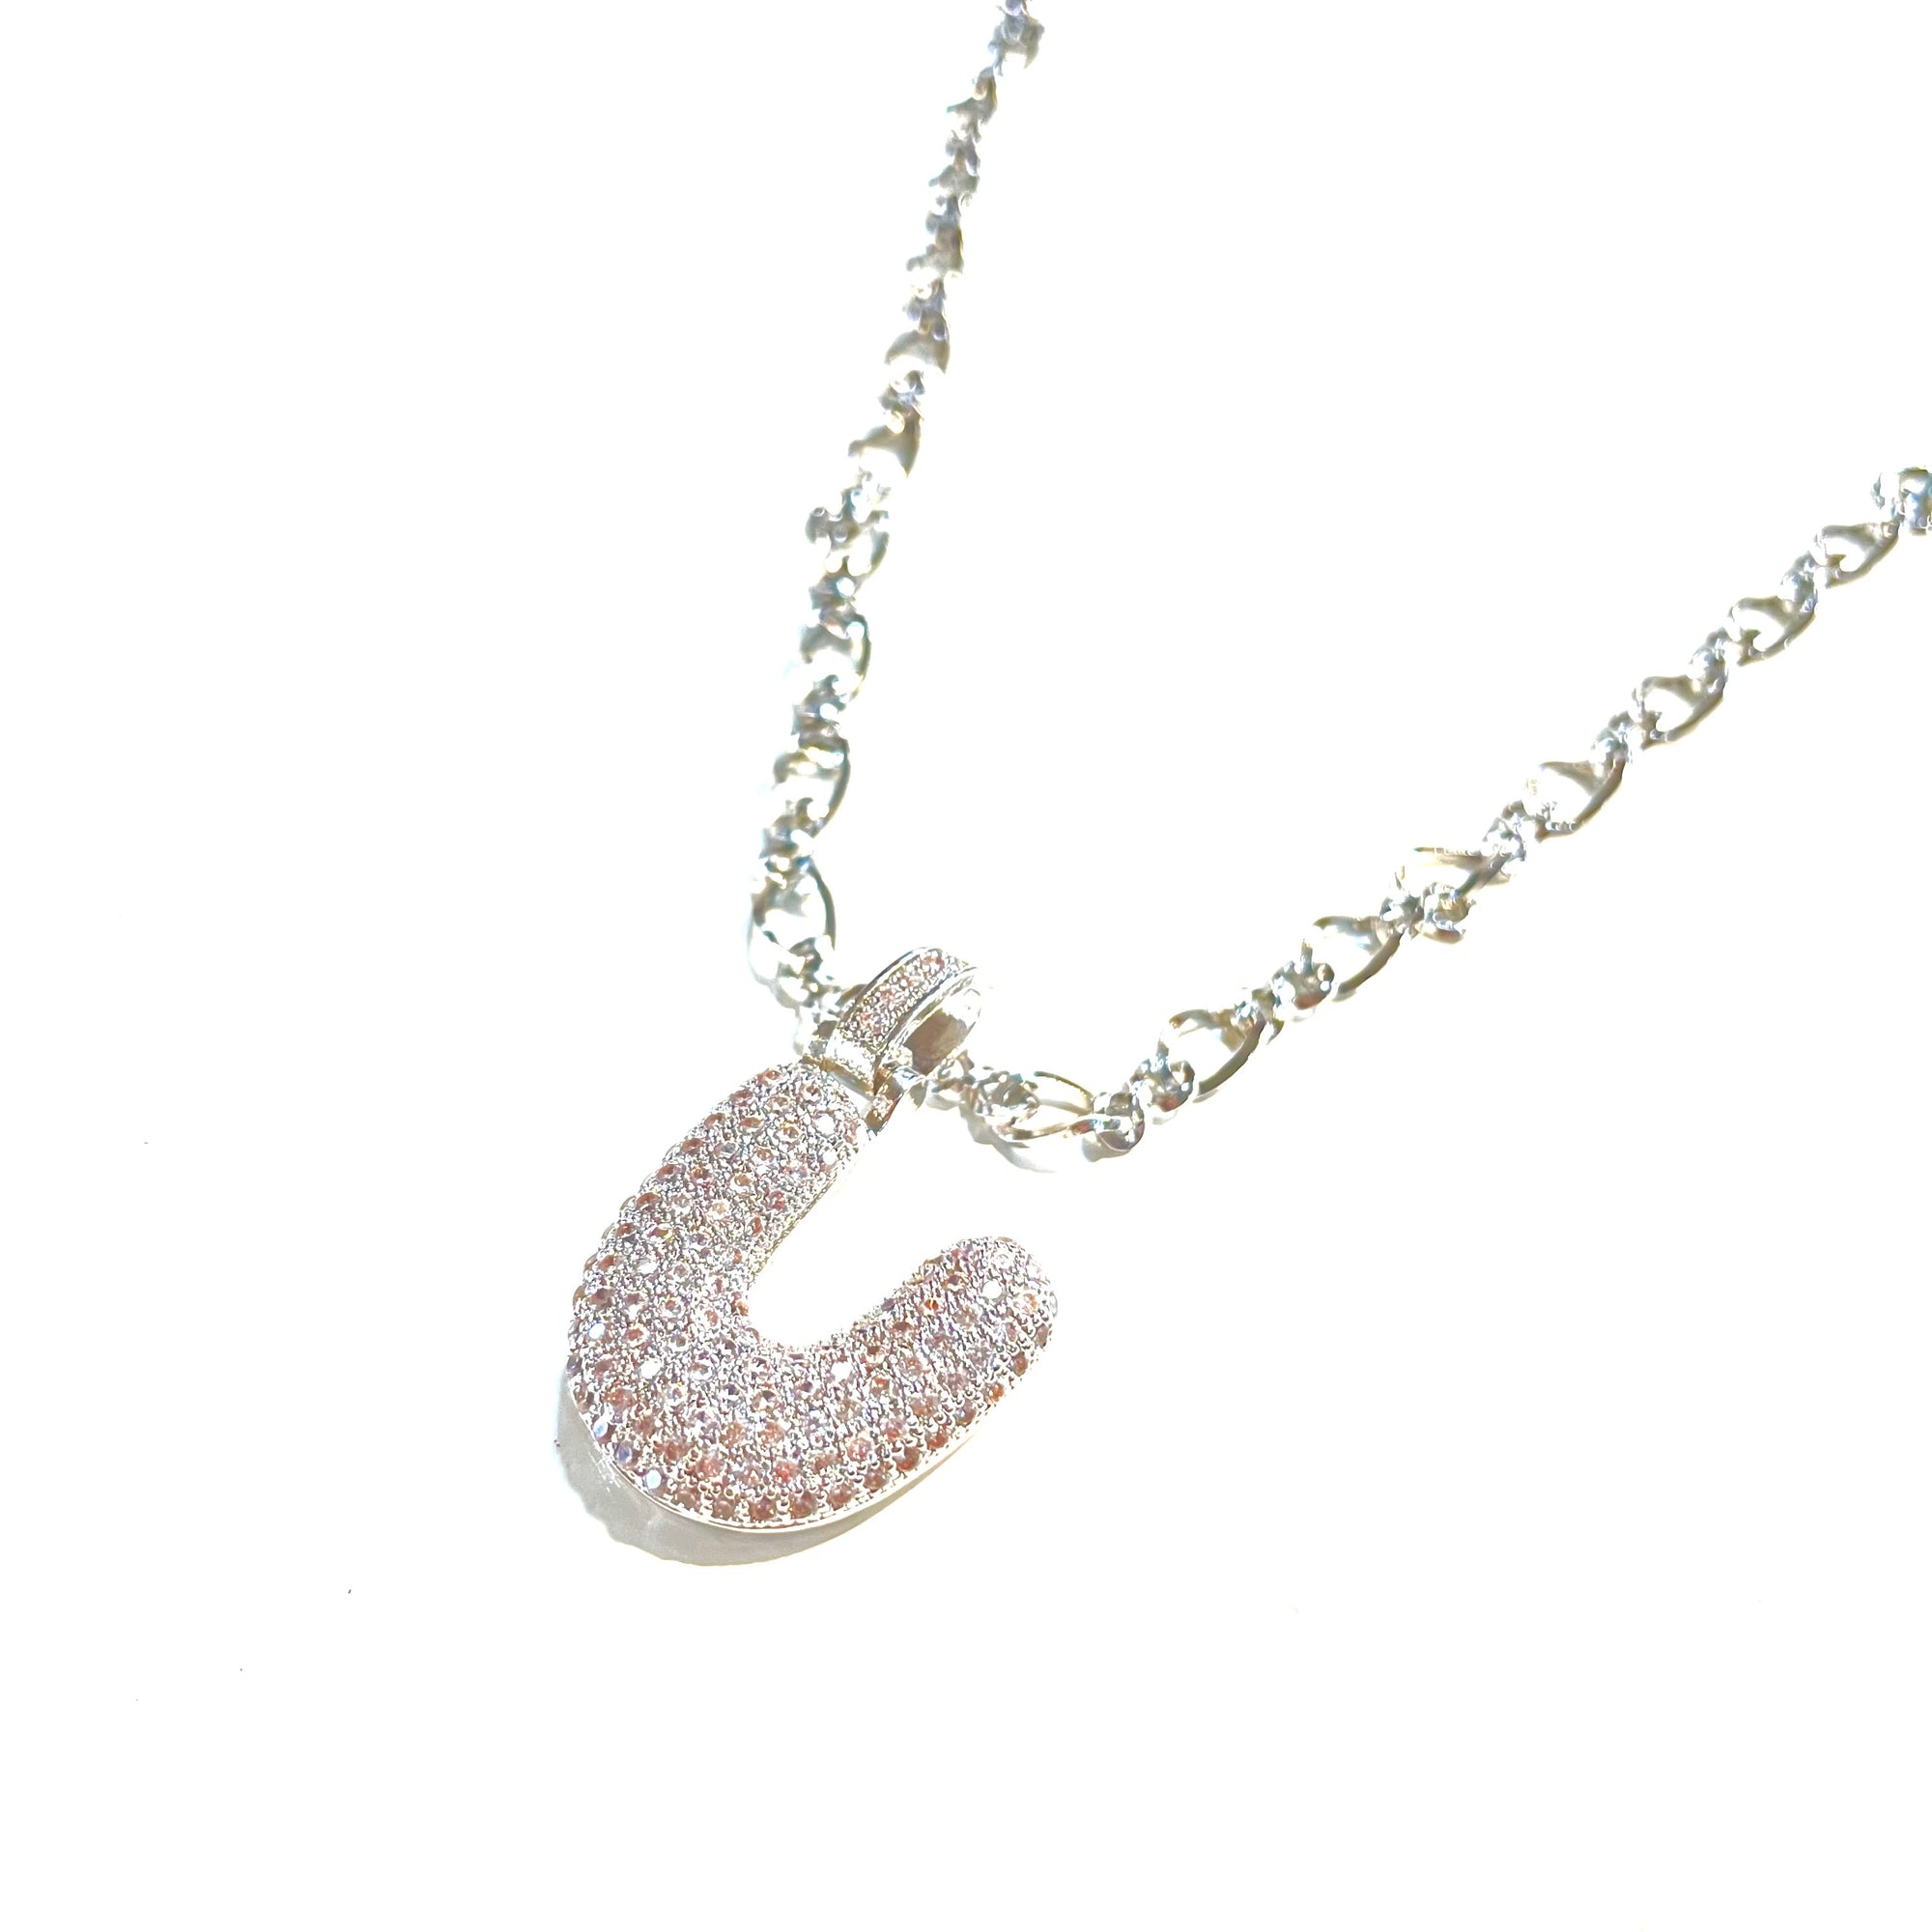 Initial Impression Necklace Necklaces Cerese D, Inc. Silver U 